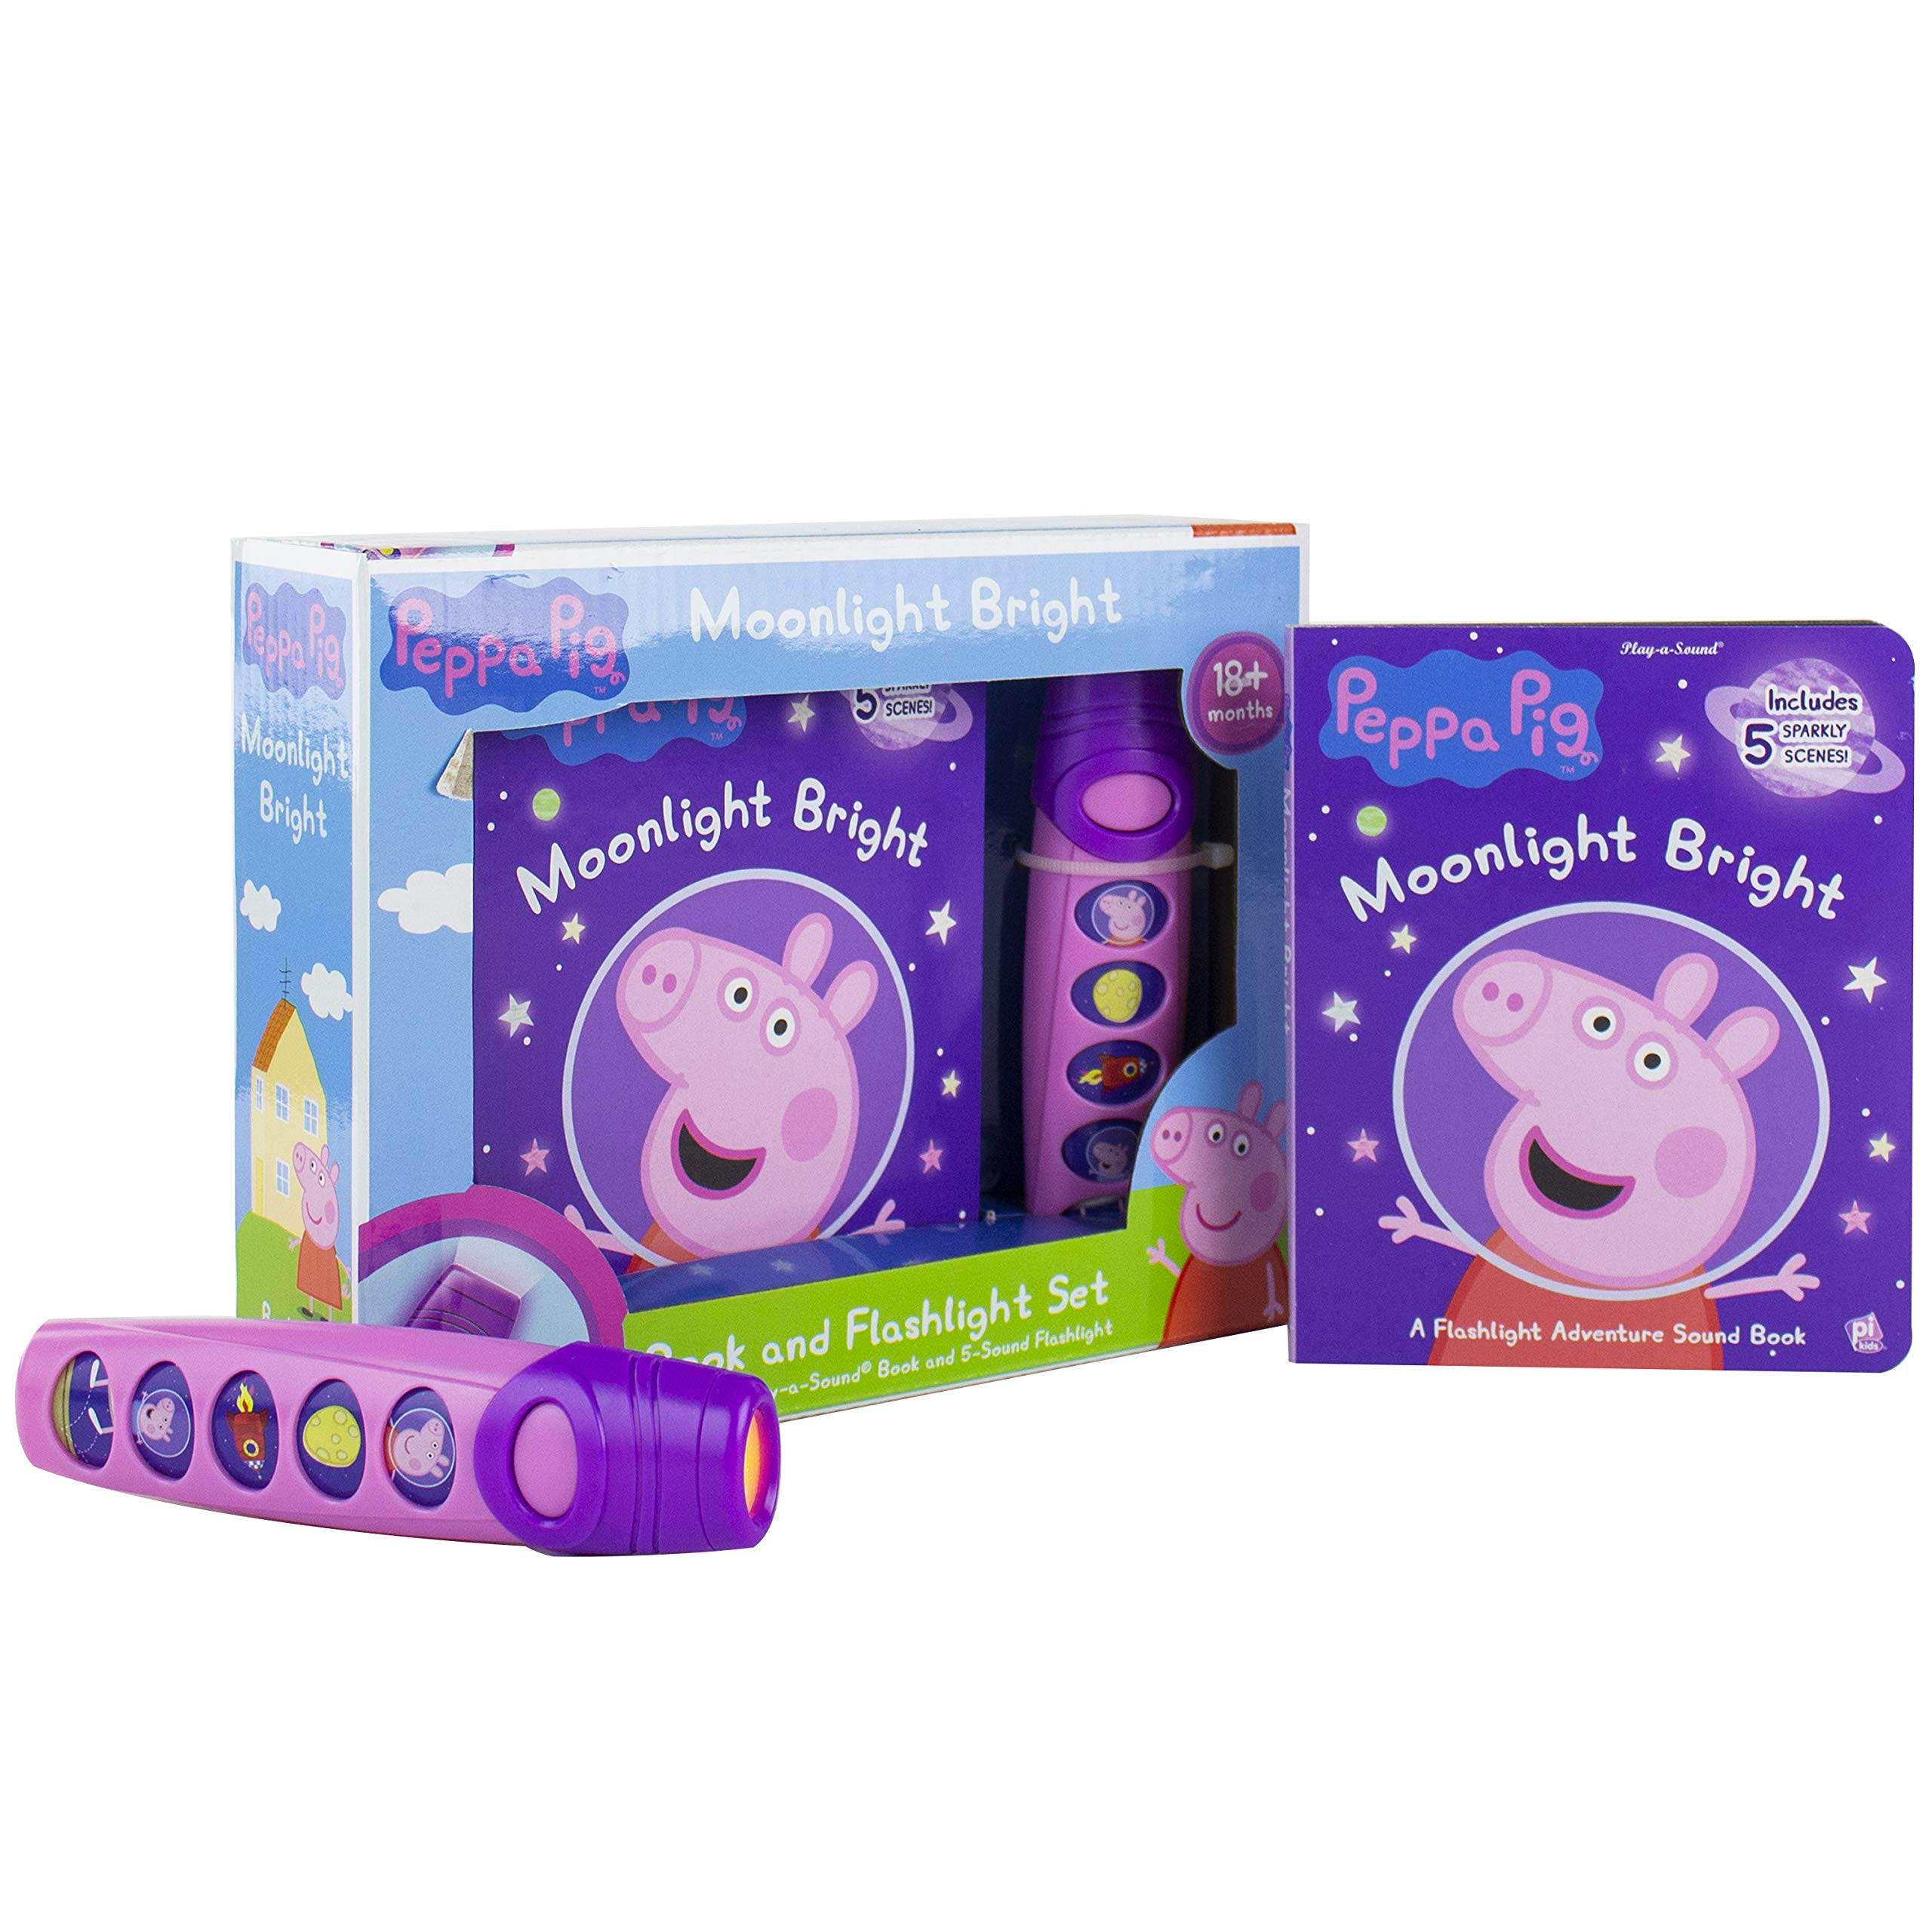 Peppa Pig Moonlight Bright Sound Book & Sound Flashlight Toy Set $9.89 + FS w/ Amazon Prime or FS on $25+